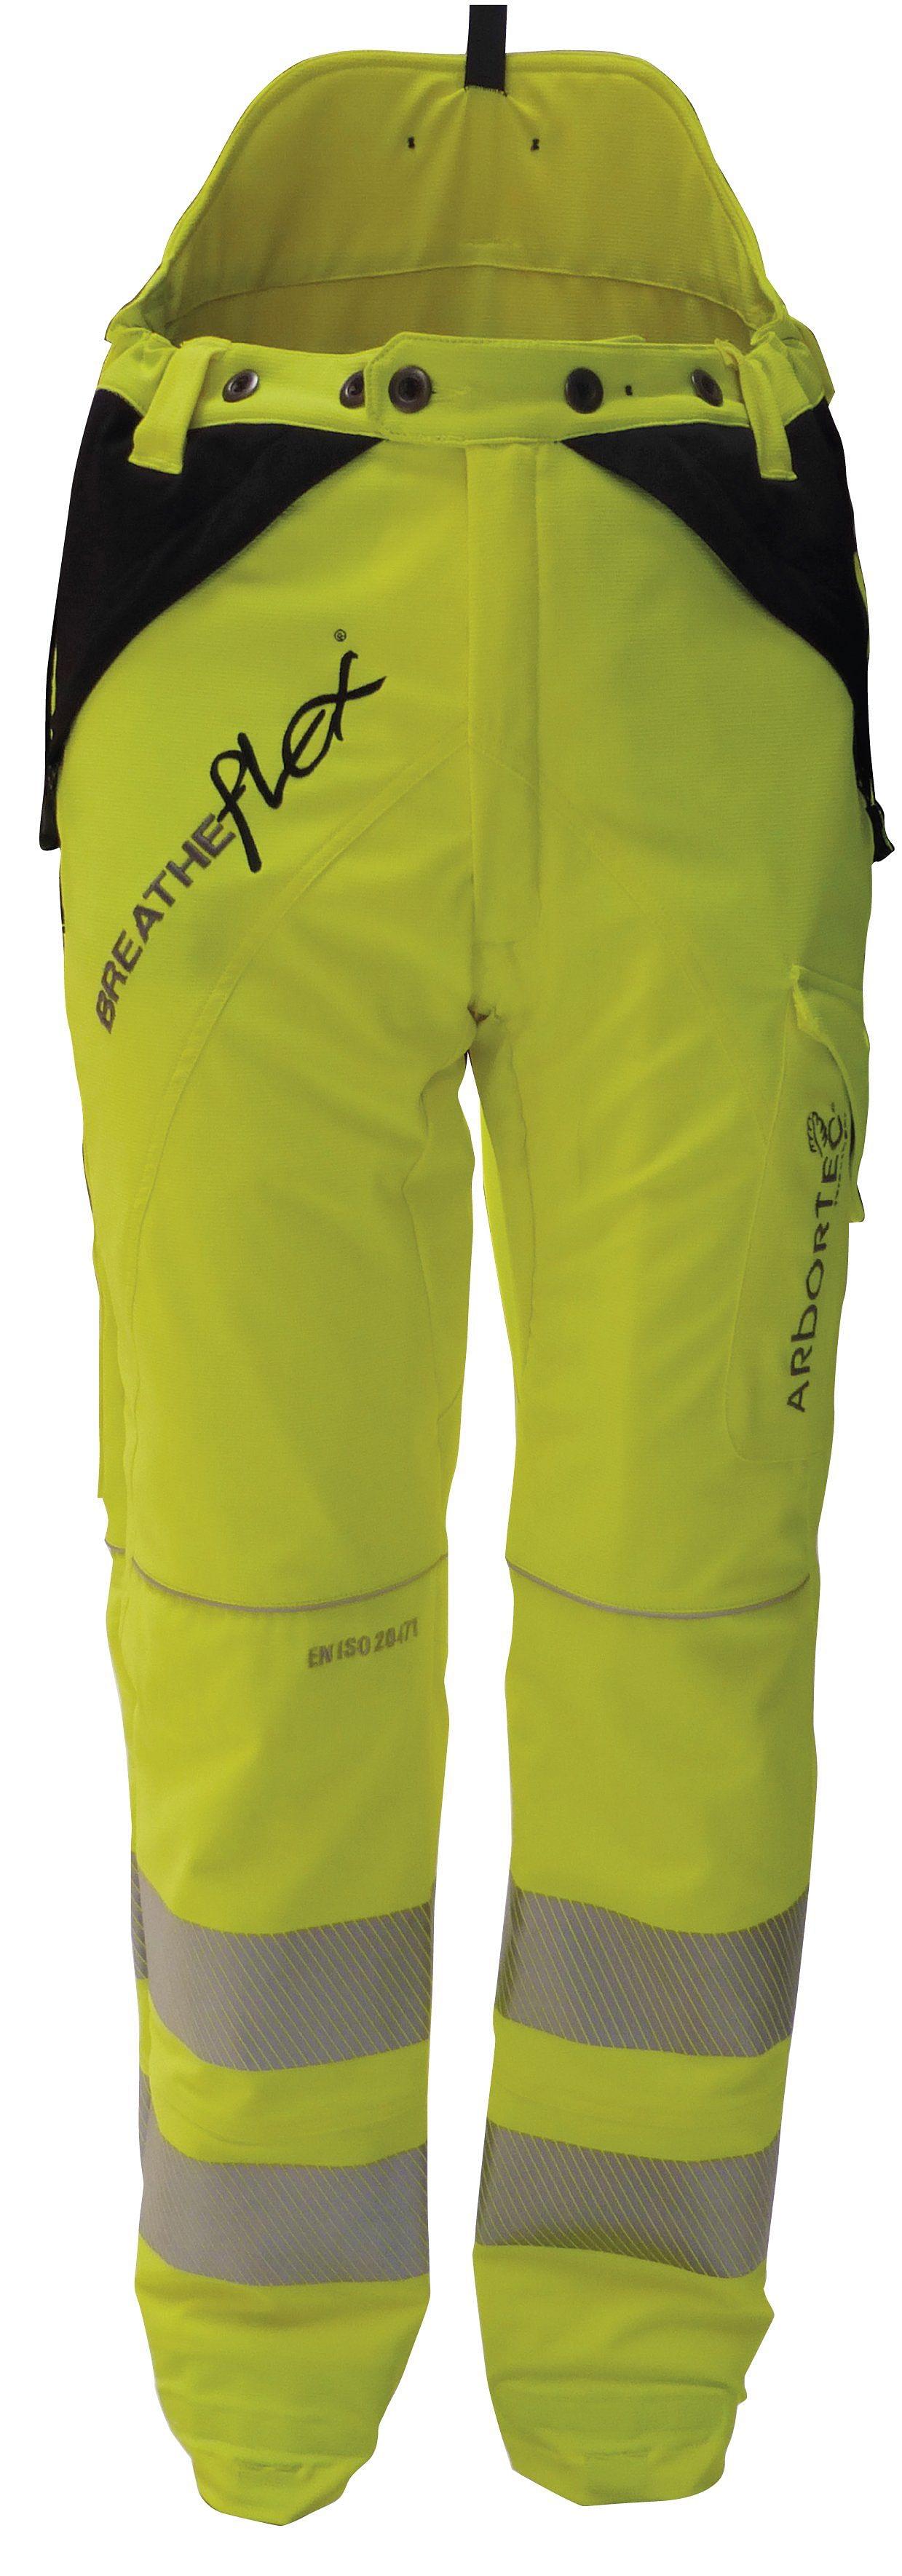 Arbortec Breatheflex Ladies Type A Chainsaw Trousers For Sale